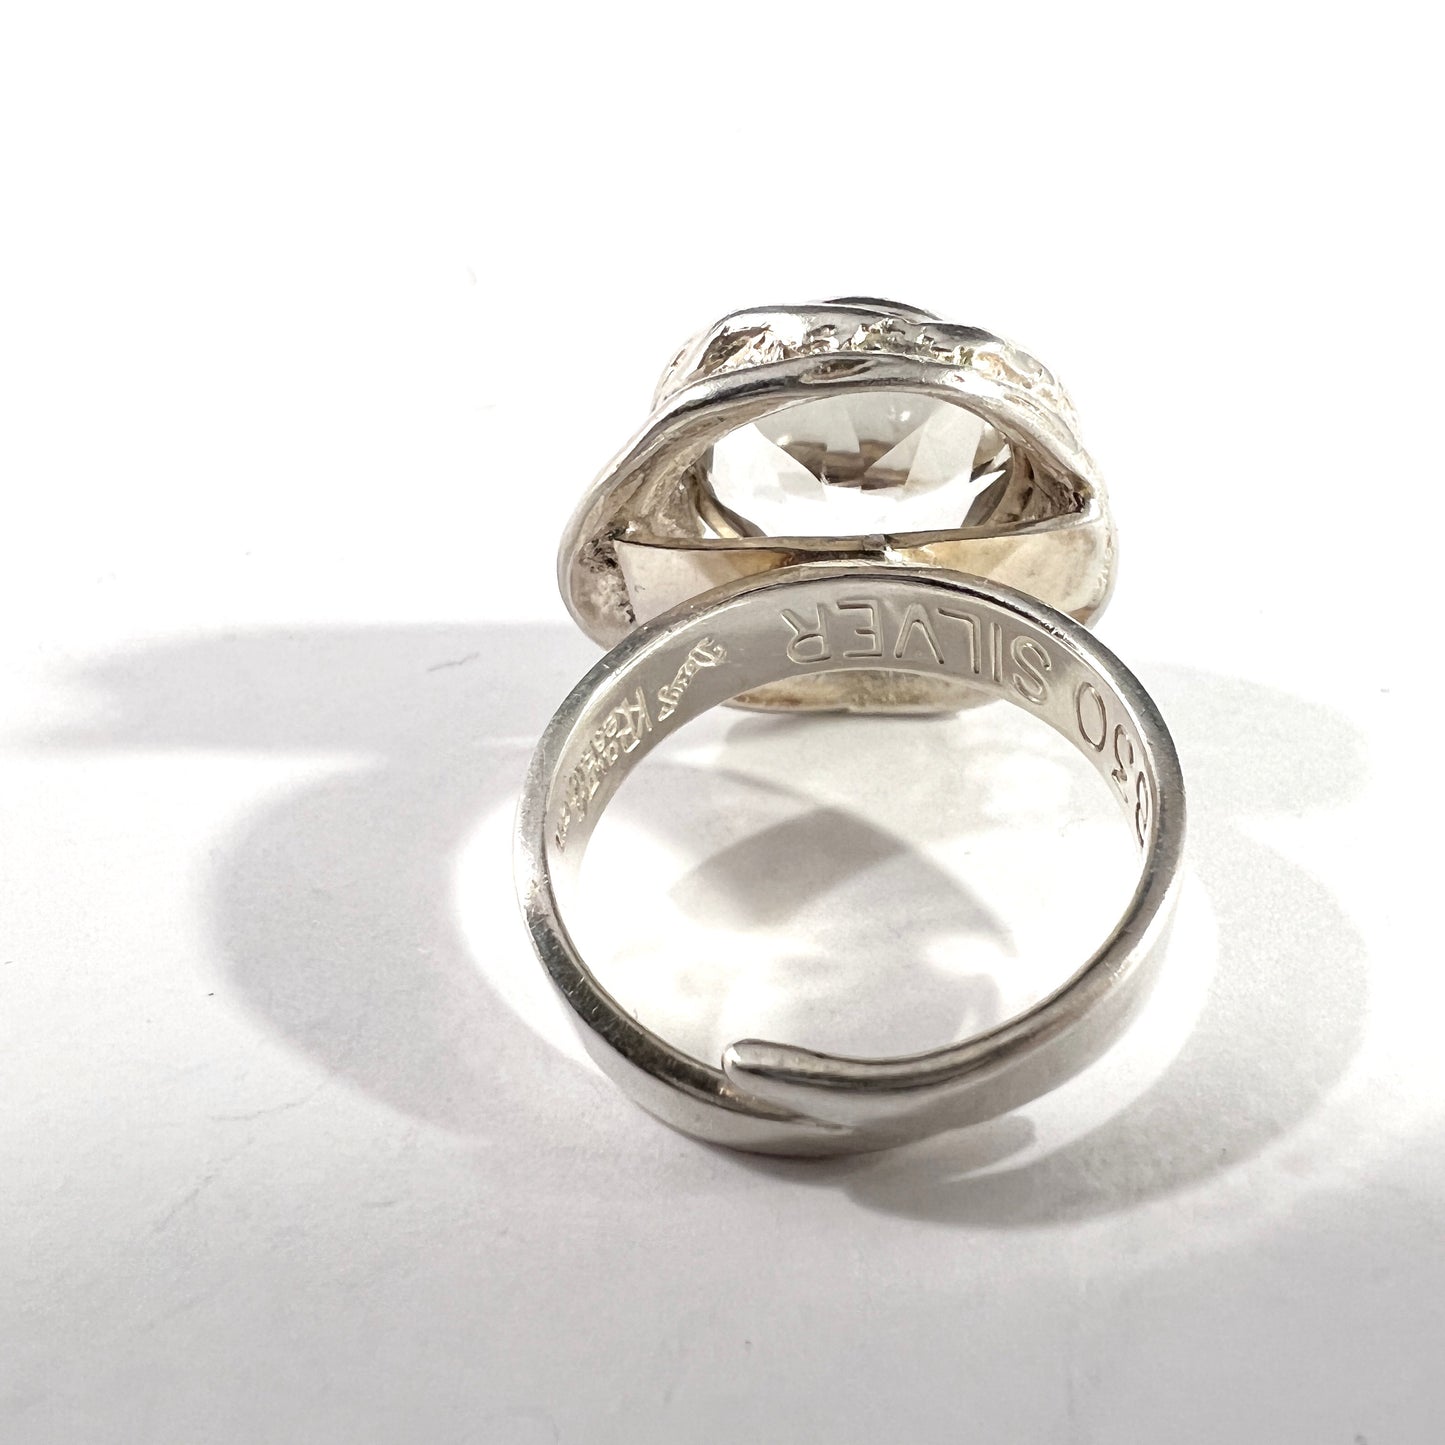 Raimo Keskinen, Finland 1970s. Solid Silver Rock Crystal Ring. Adjustable Size.